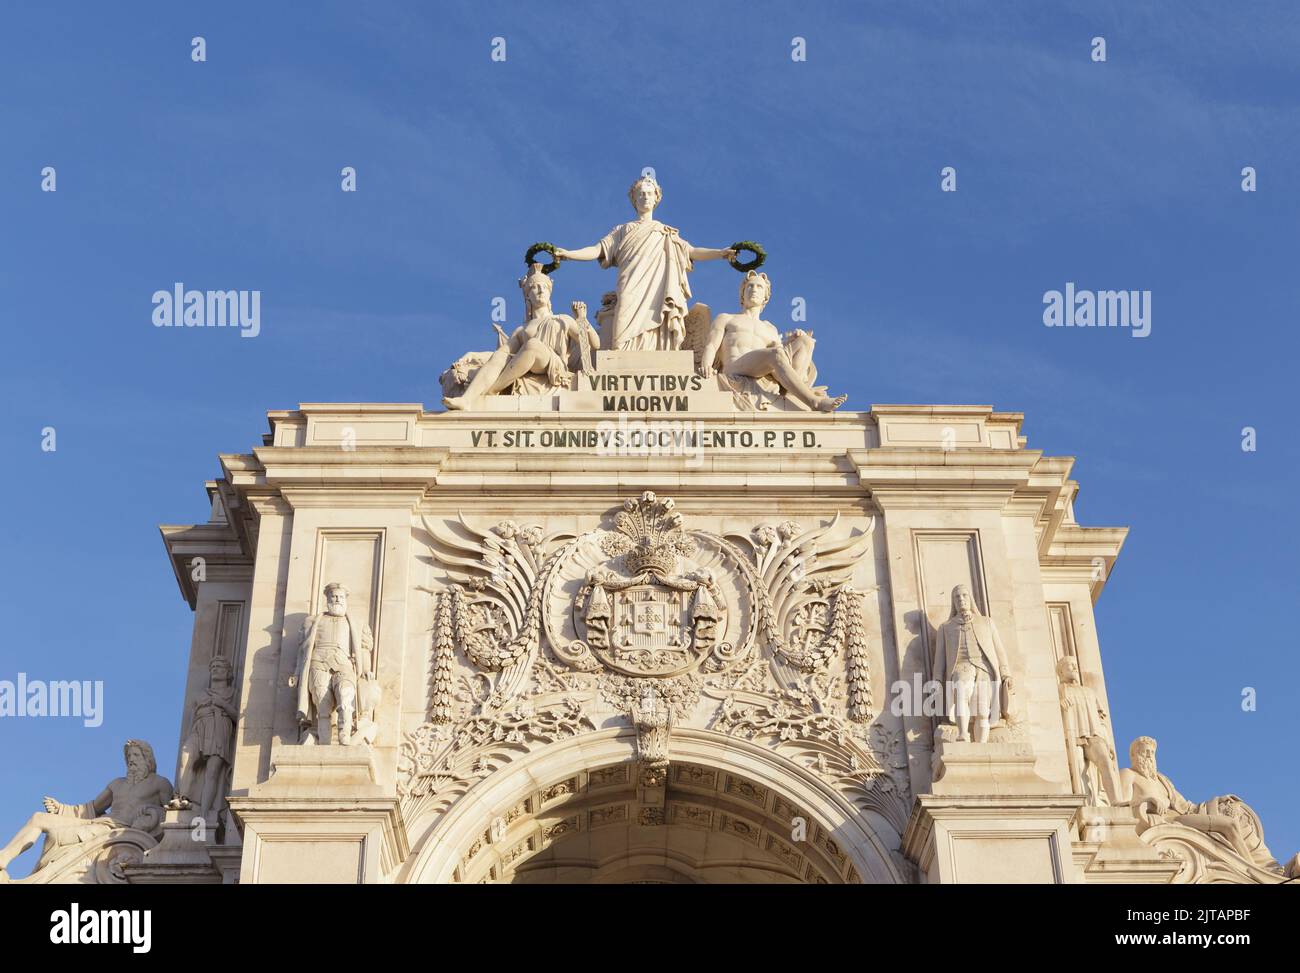 Detail of the Arco da Rua Augusta or Augusta Street Arch, Commerce Square, Praca do Comercio, Lisbon, Portugal Stock Photo